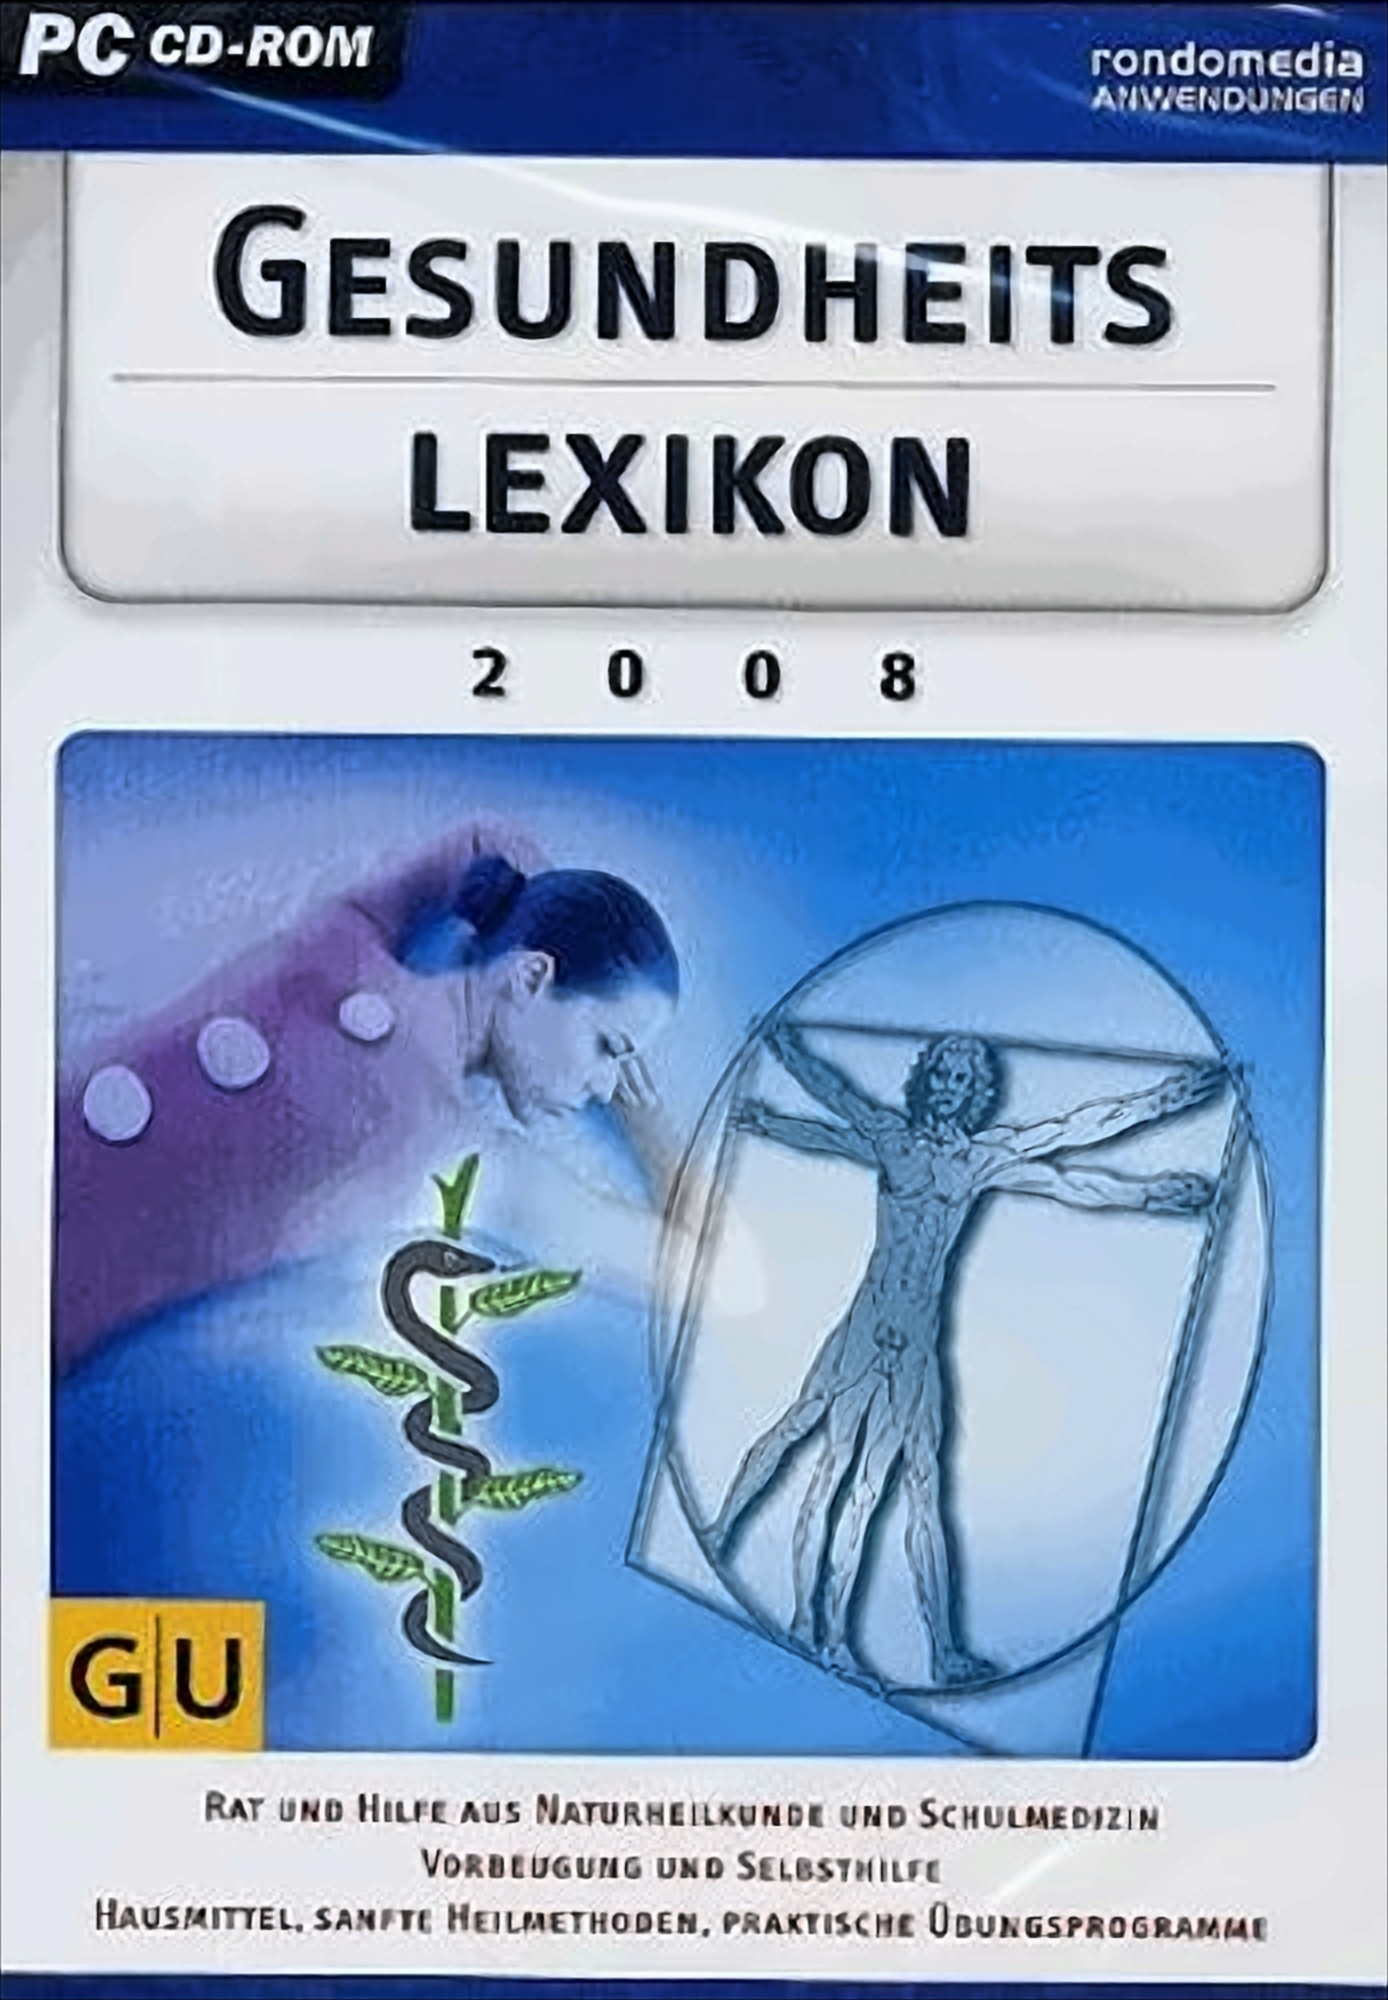 Gesundheitslexikon - 2008 [PC]